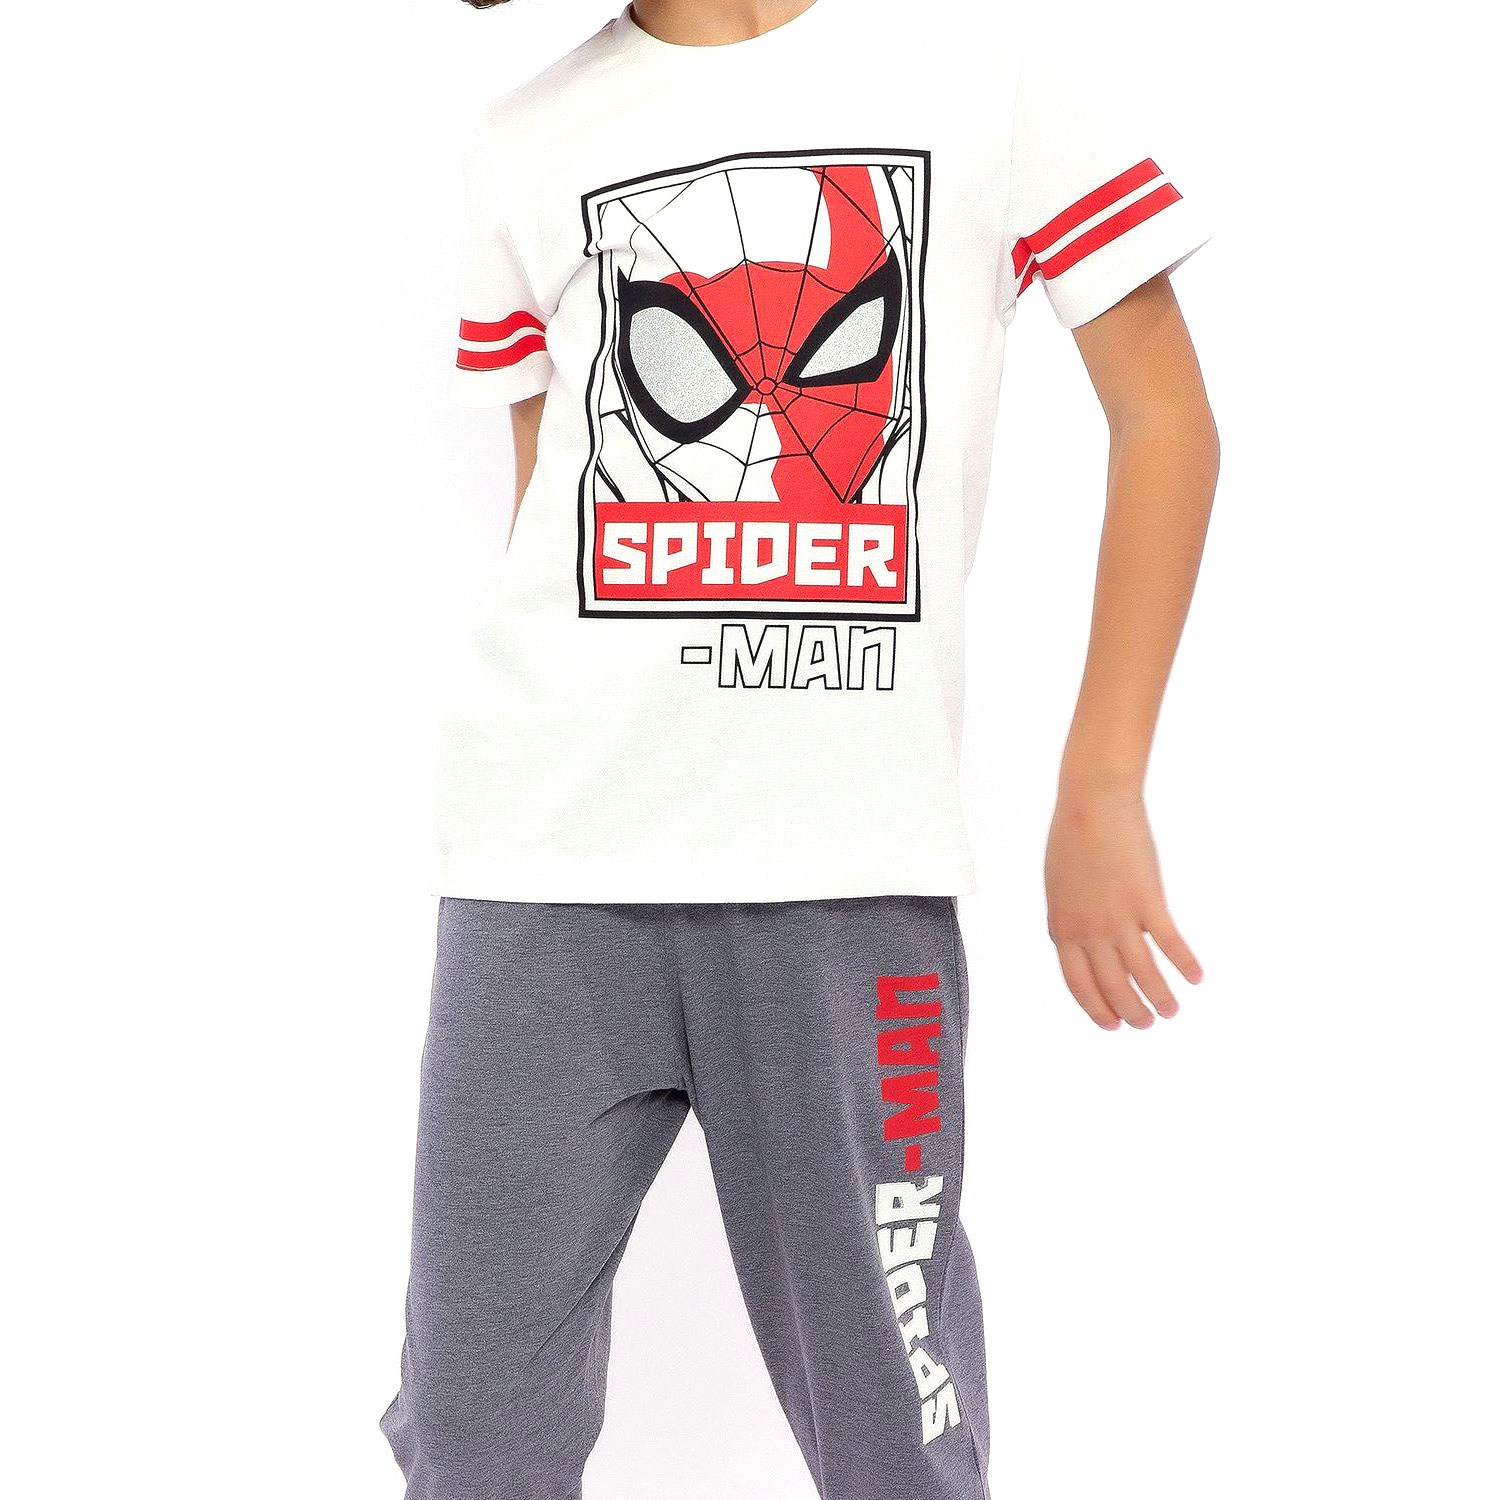 Spider-Man 2'li Erkek Çocuk Takımı D4671-3 Krem